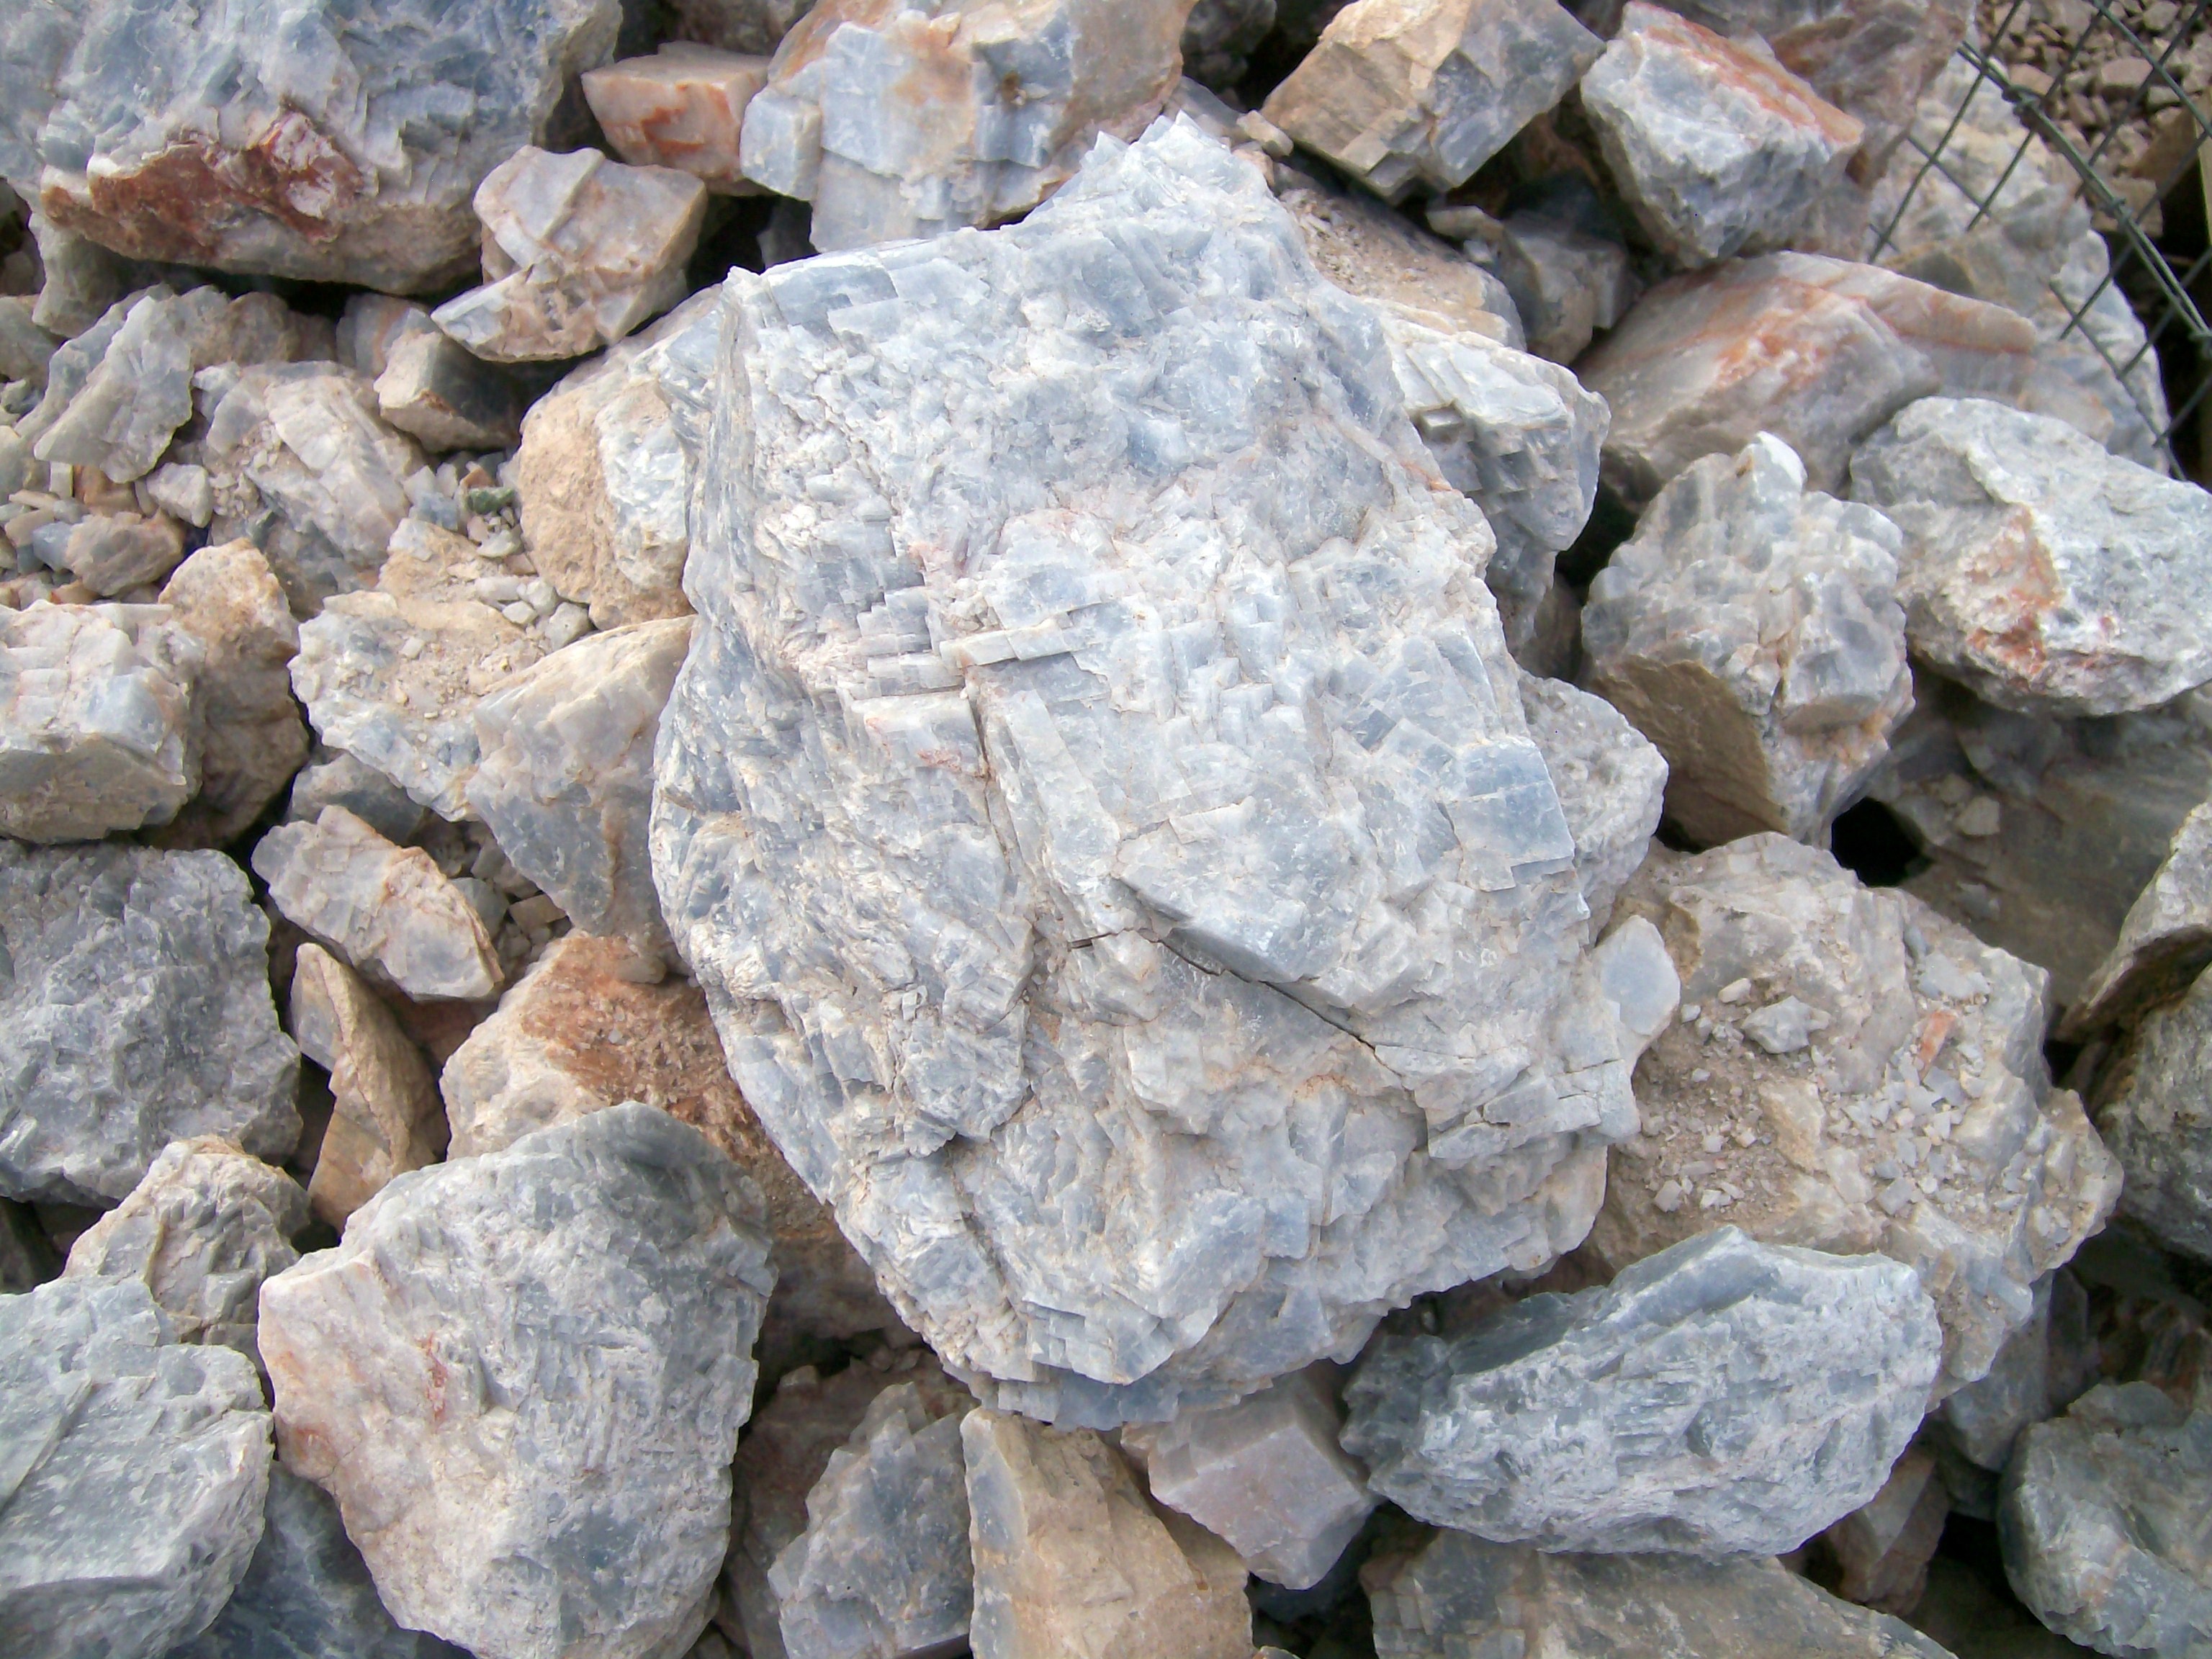 polished rocks stones, Dakota Stone's Rock Shop Hill City, SD Rough ...